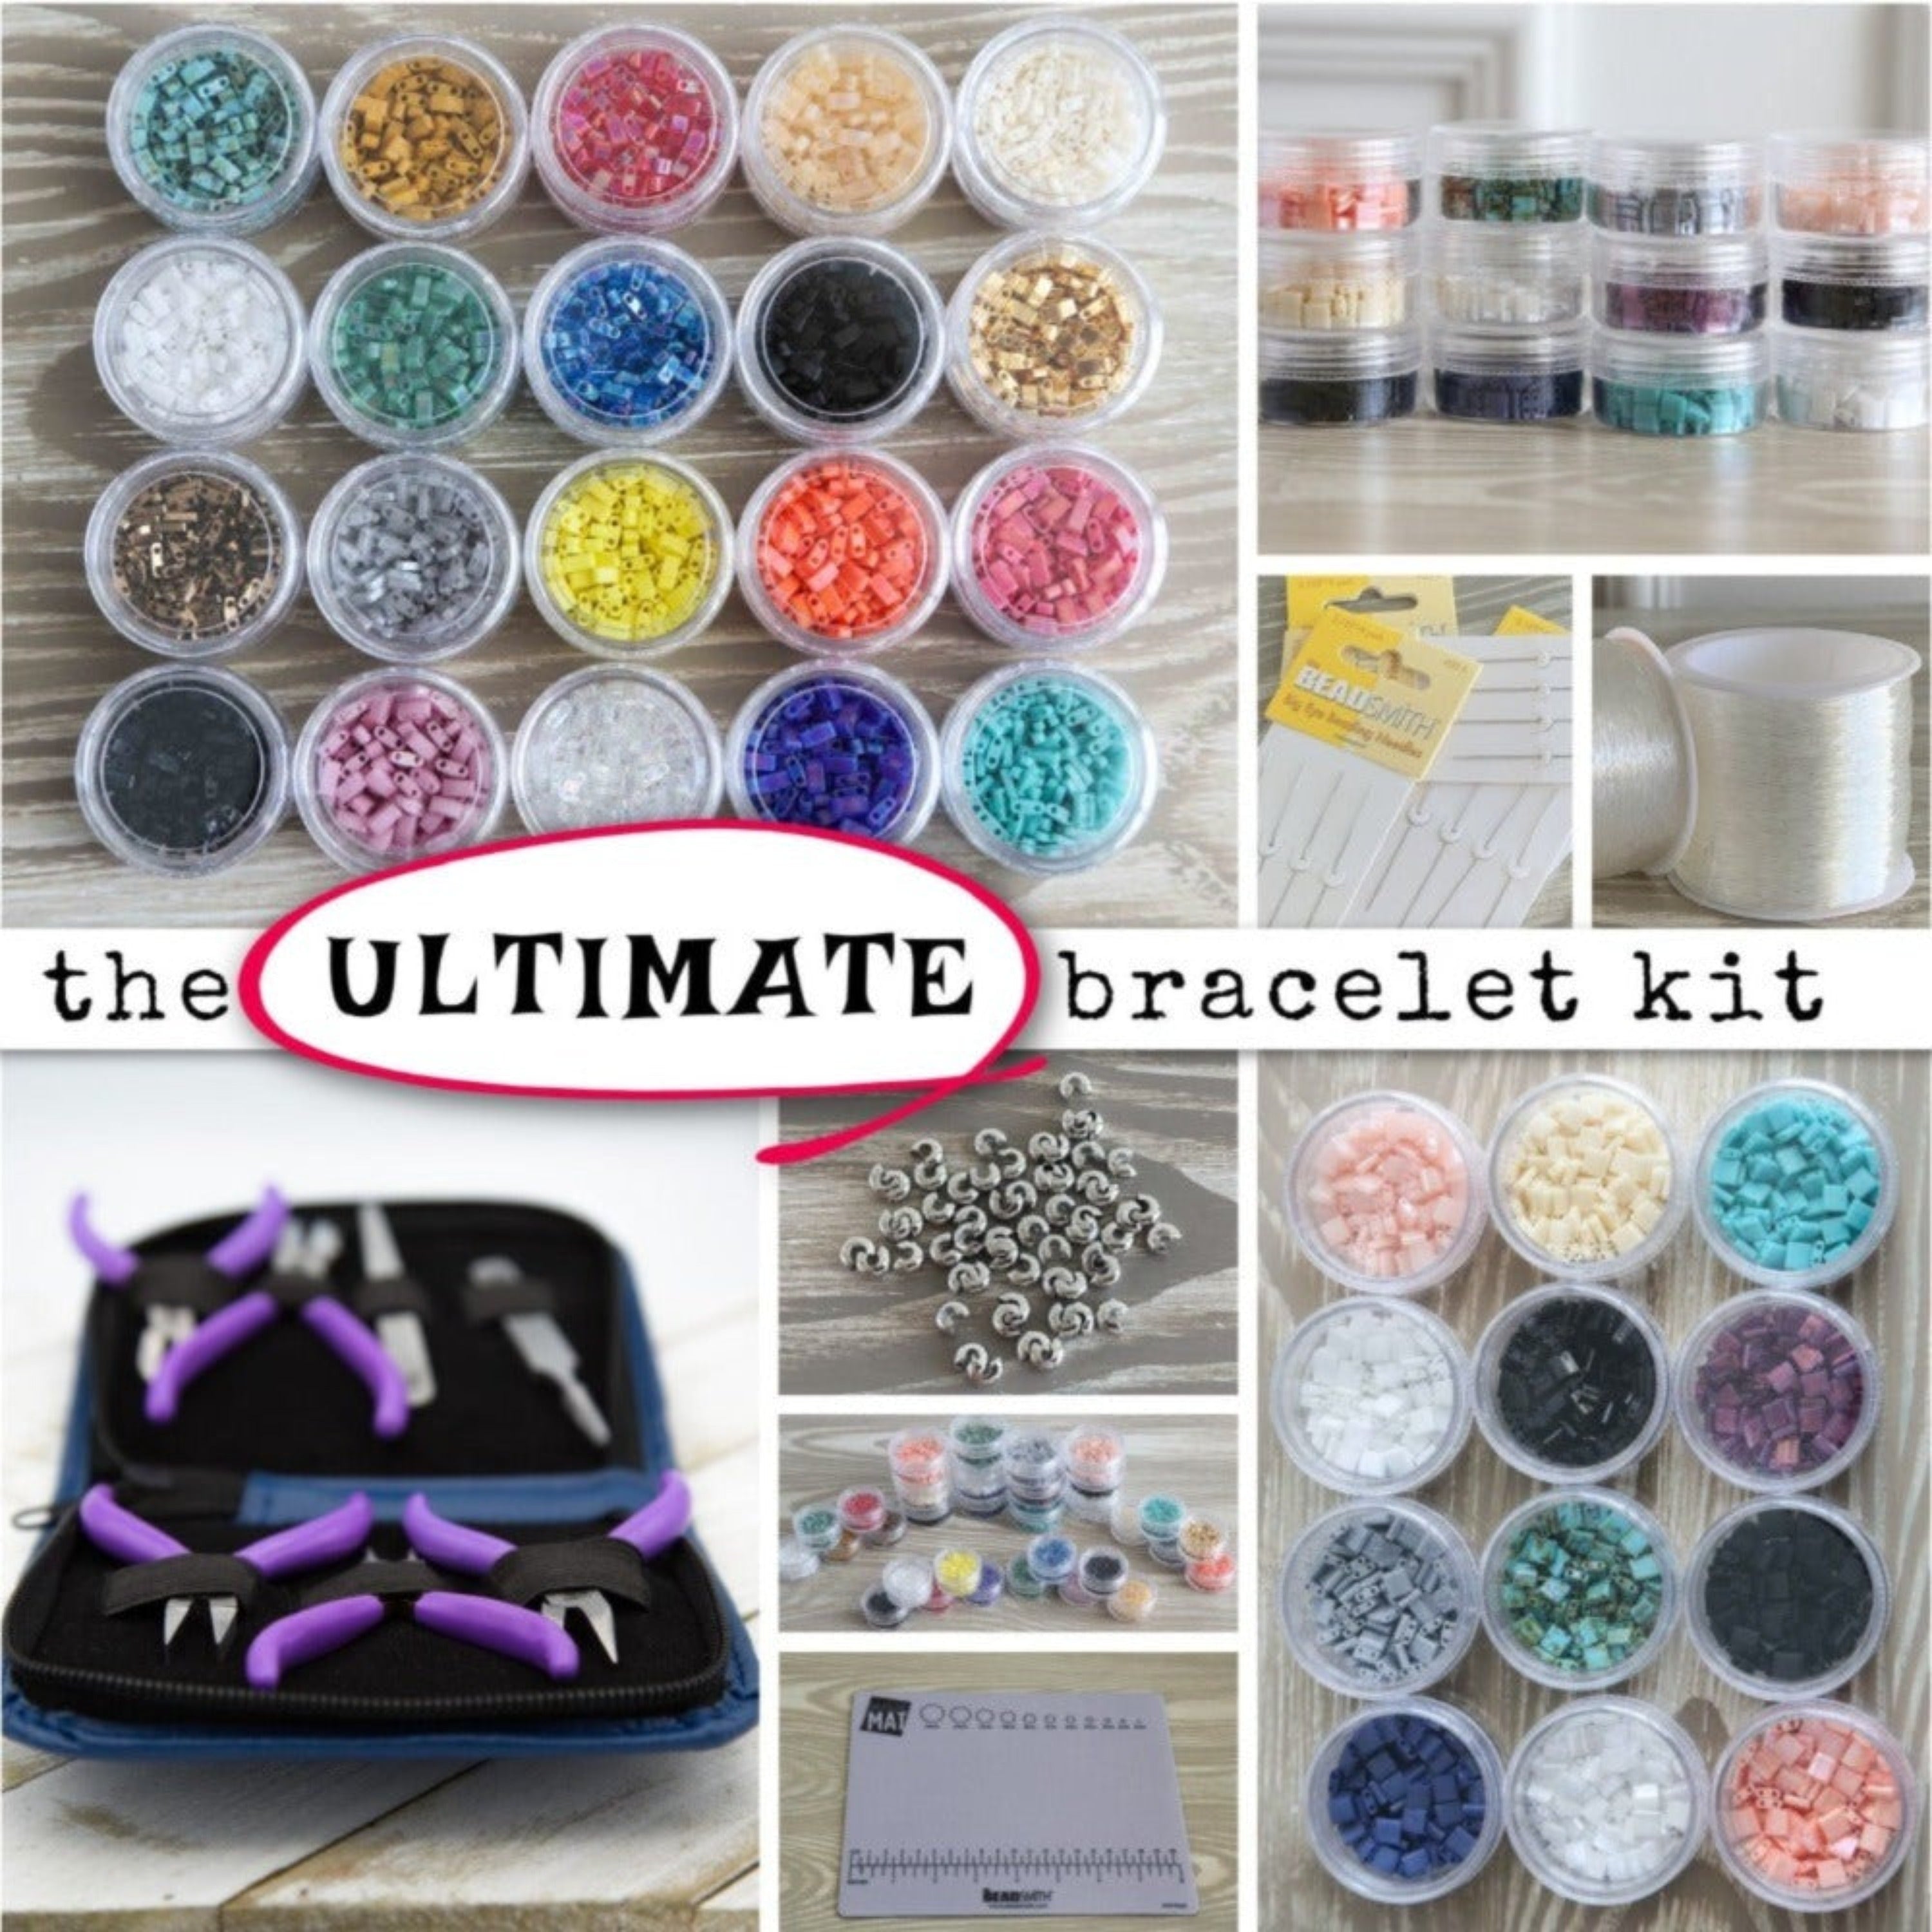 Ultimate i-Loom Bracelet Maker